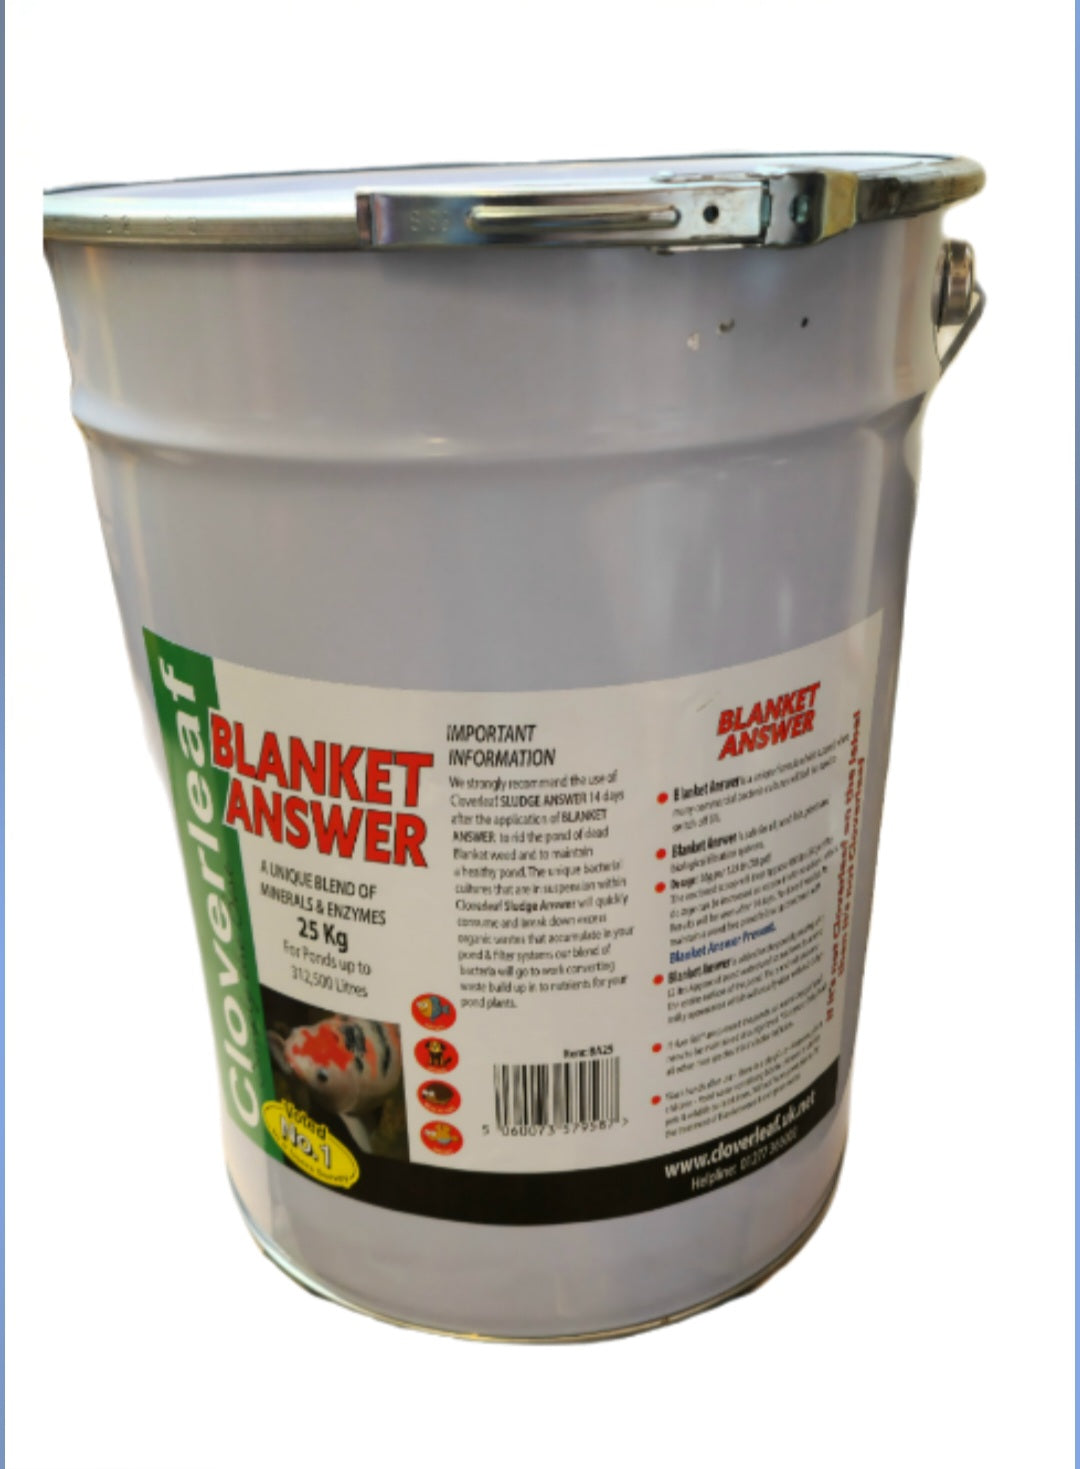 Cloverleaf Blanket Answer - Pond Blanketweed Treatment 25KG